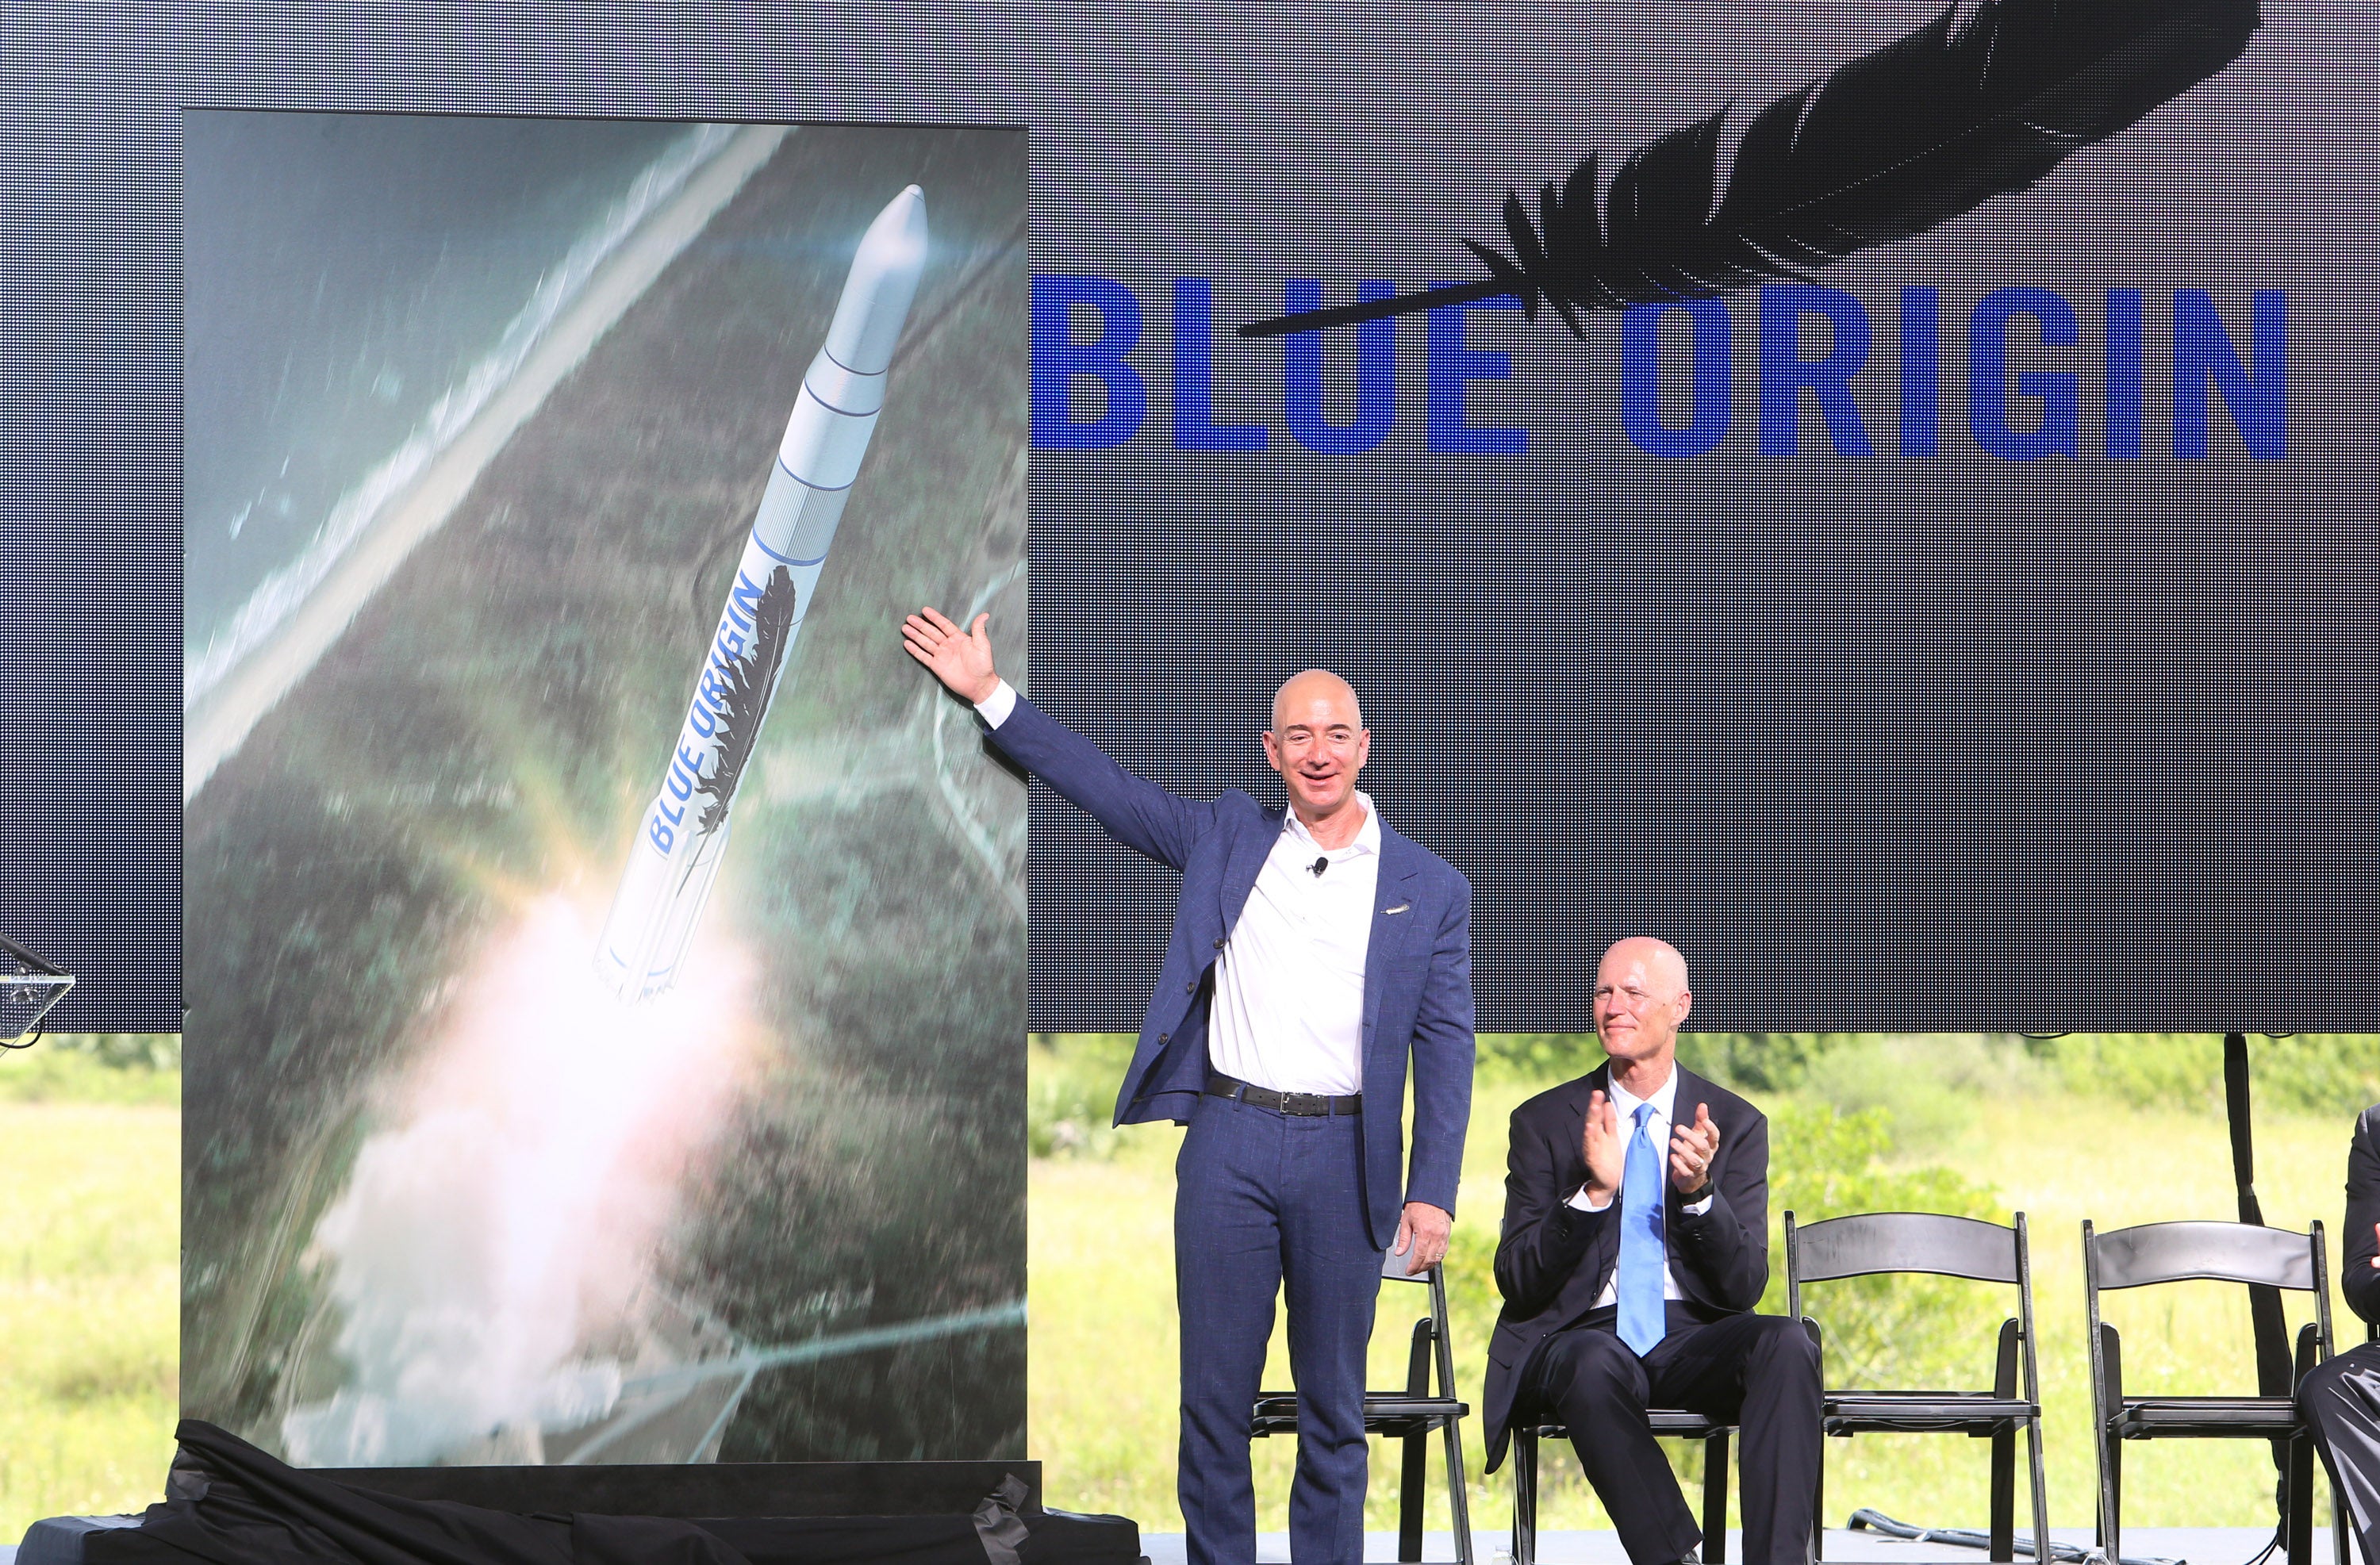 Jeff Bezos reveals Blue Origin rocket